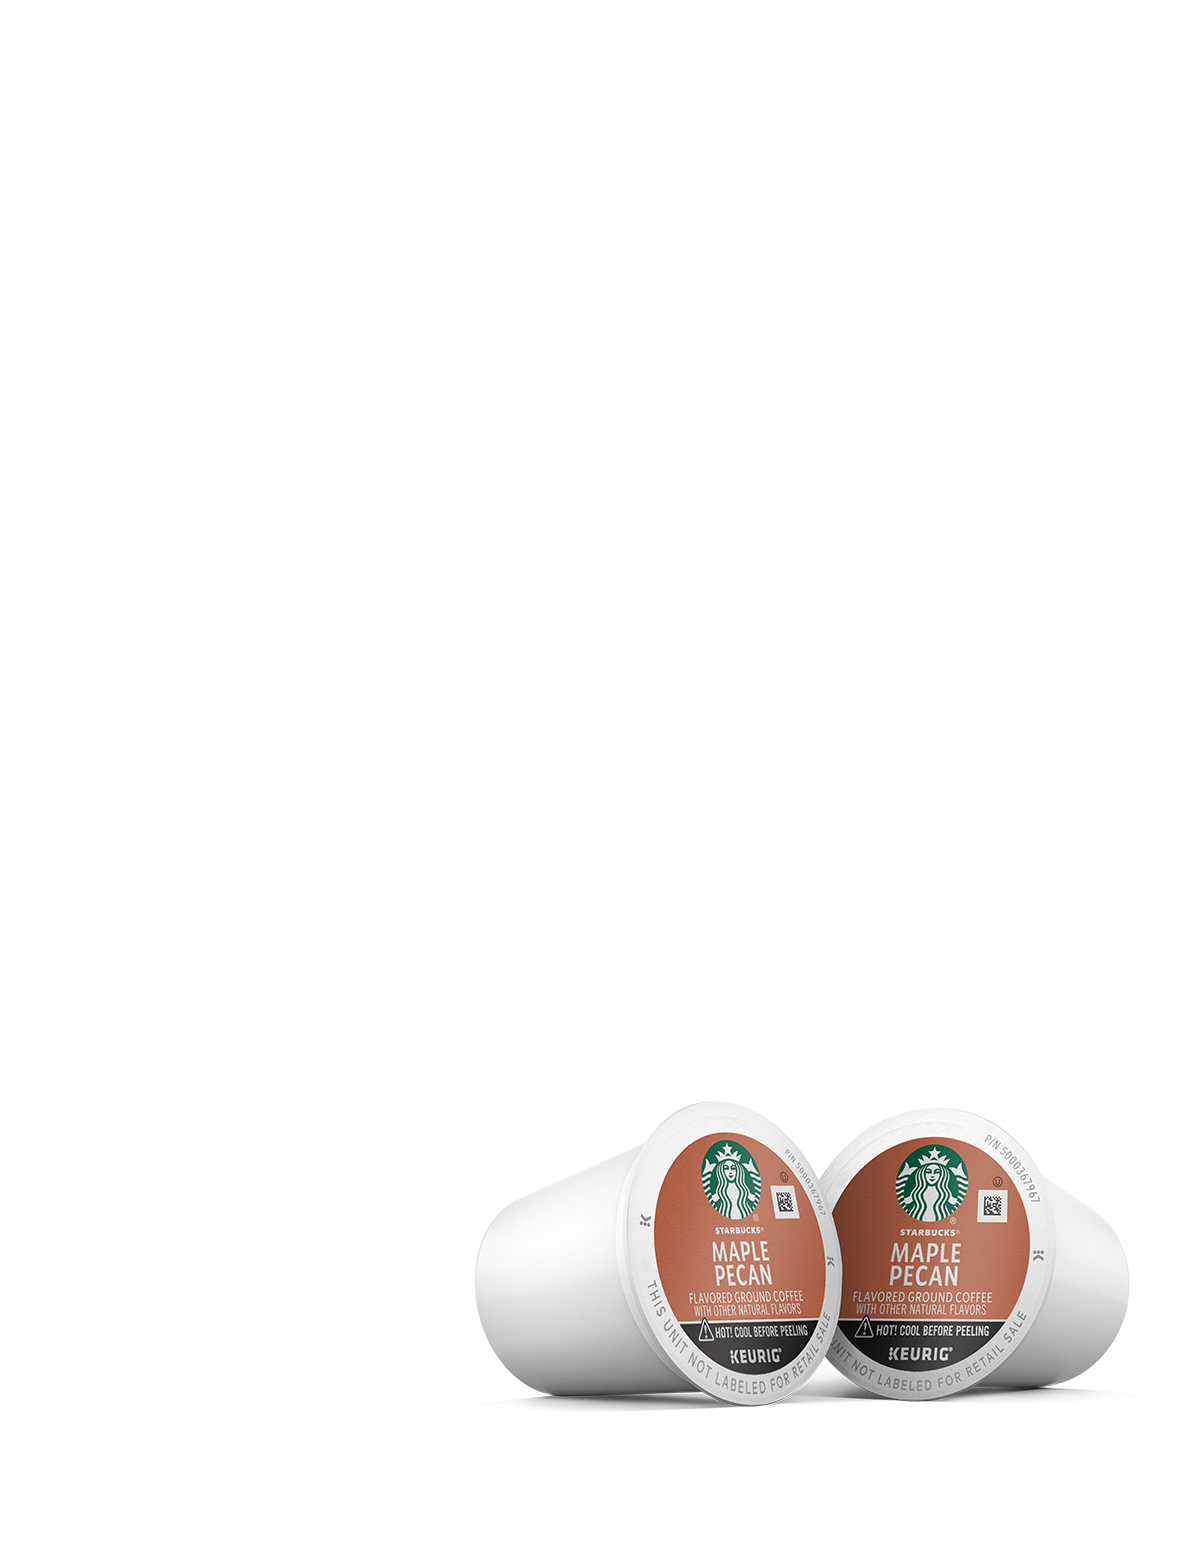 Starbucks® Maple Pecan Flavored Coffee